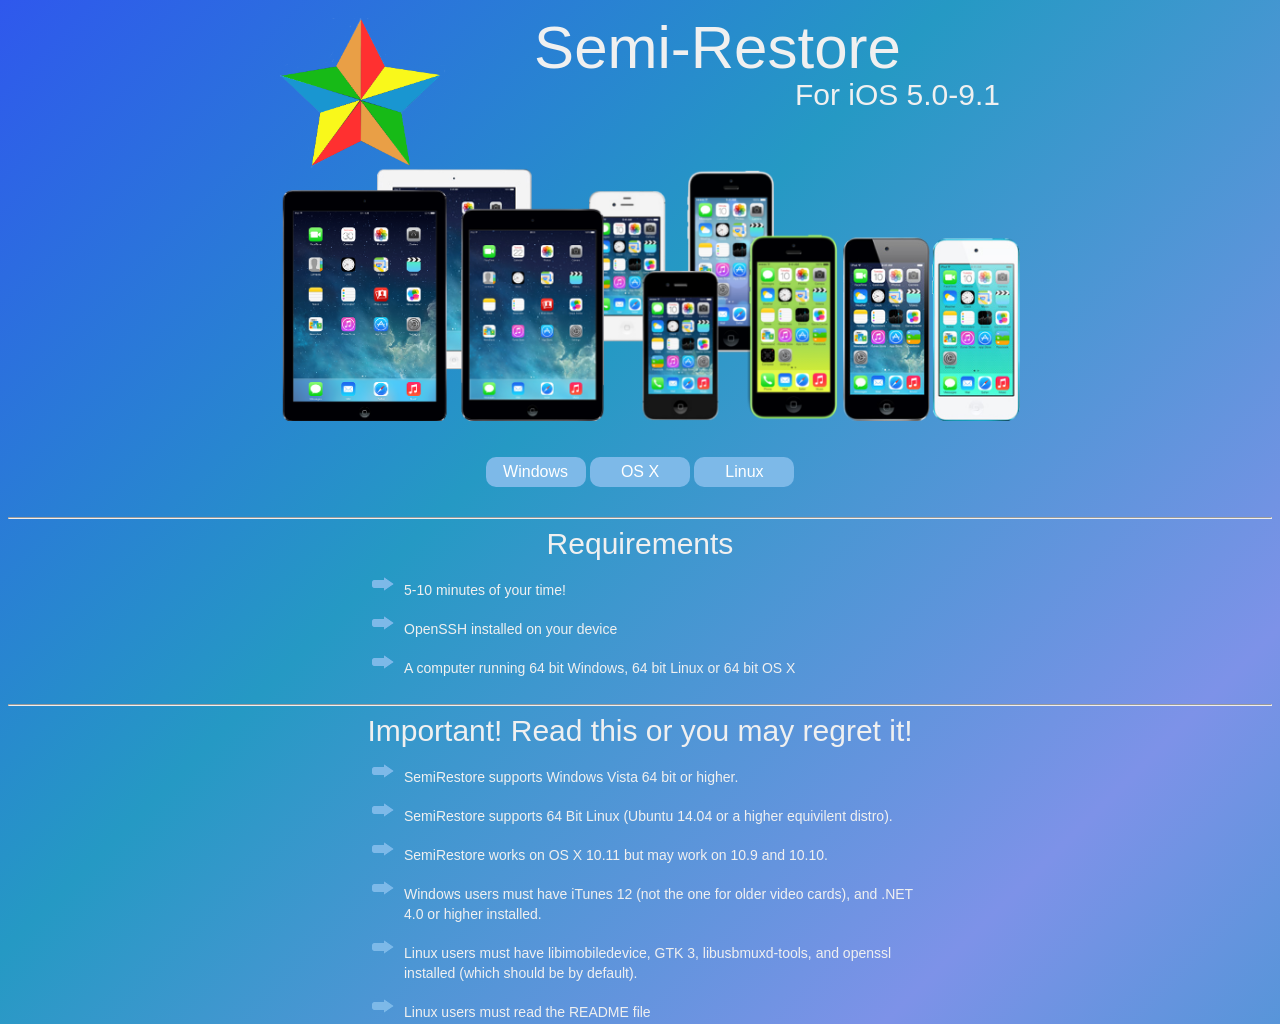 semi-restore.com